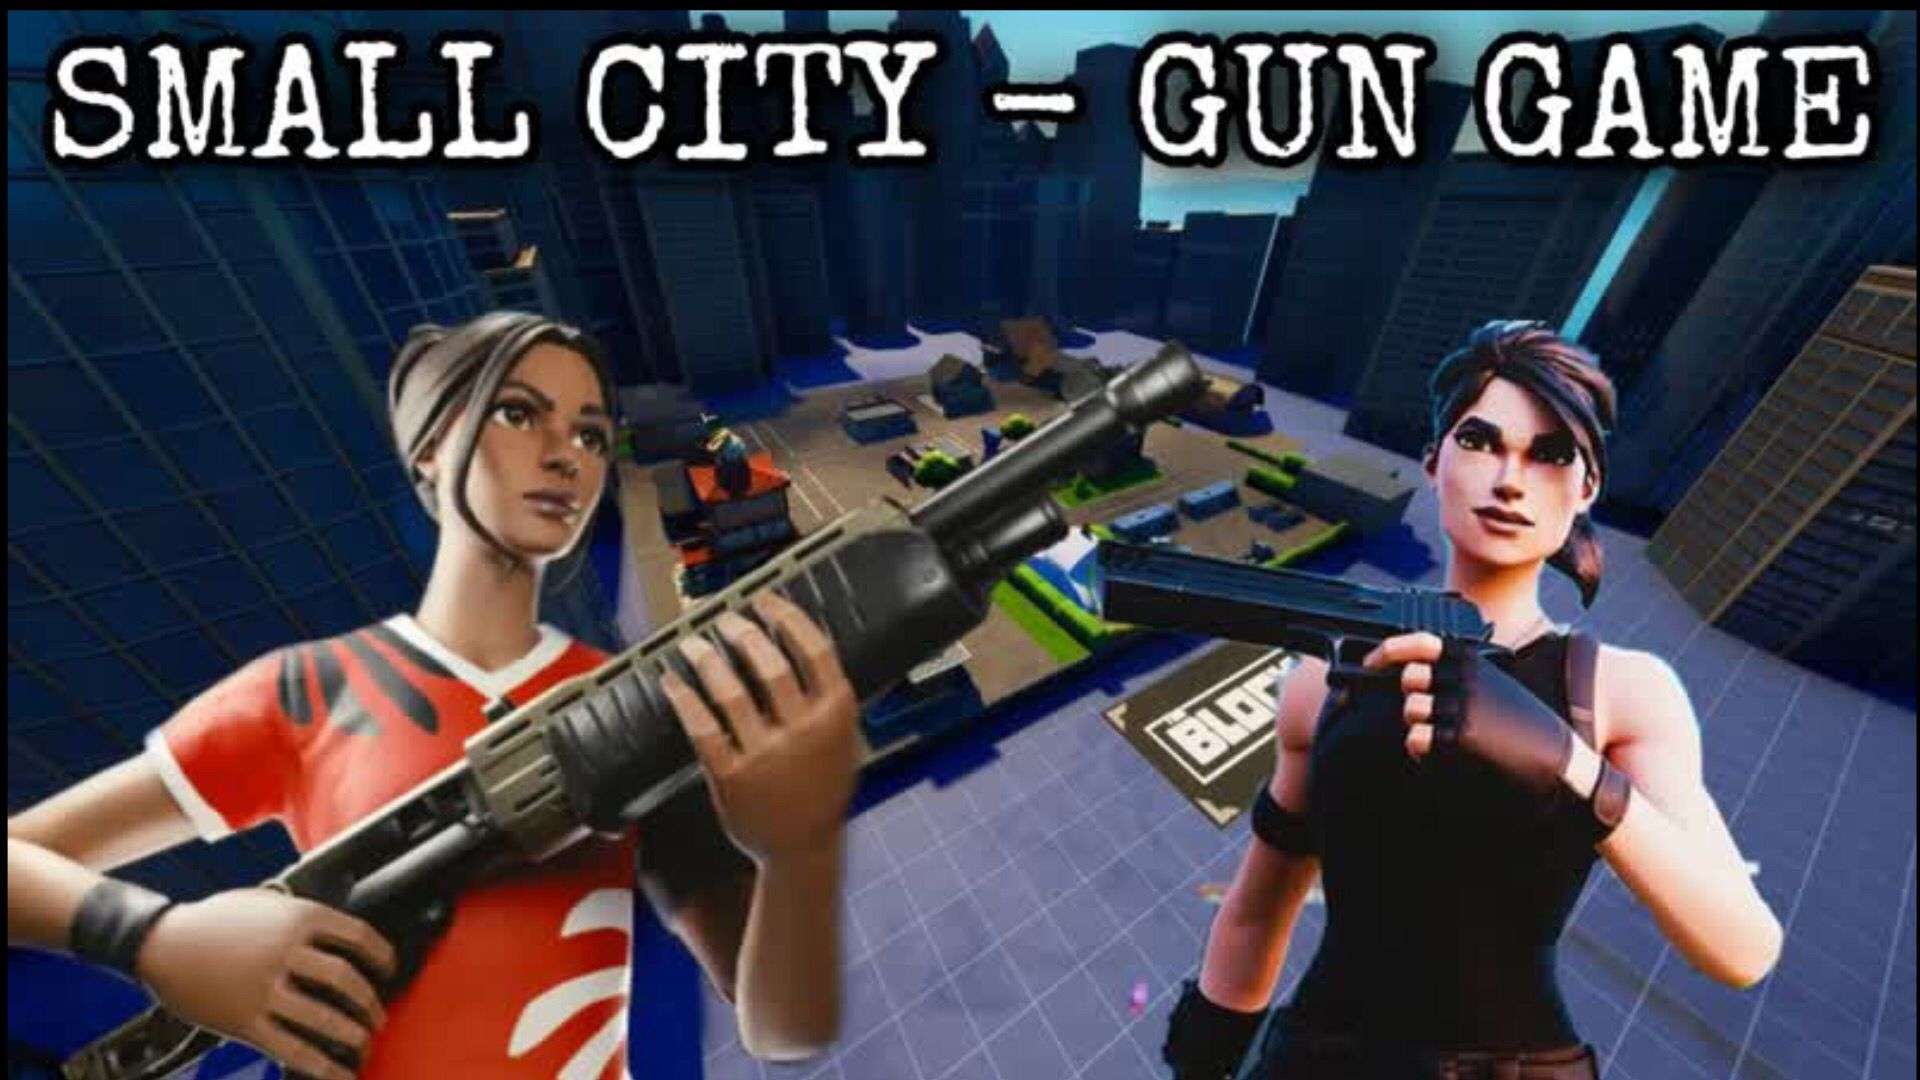 GUN GAME - SMALL CITY